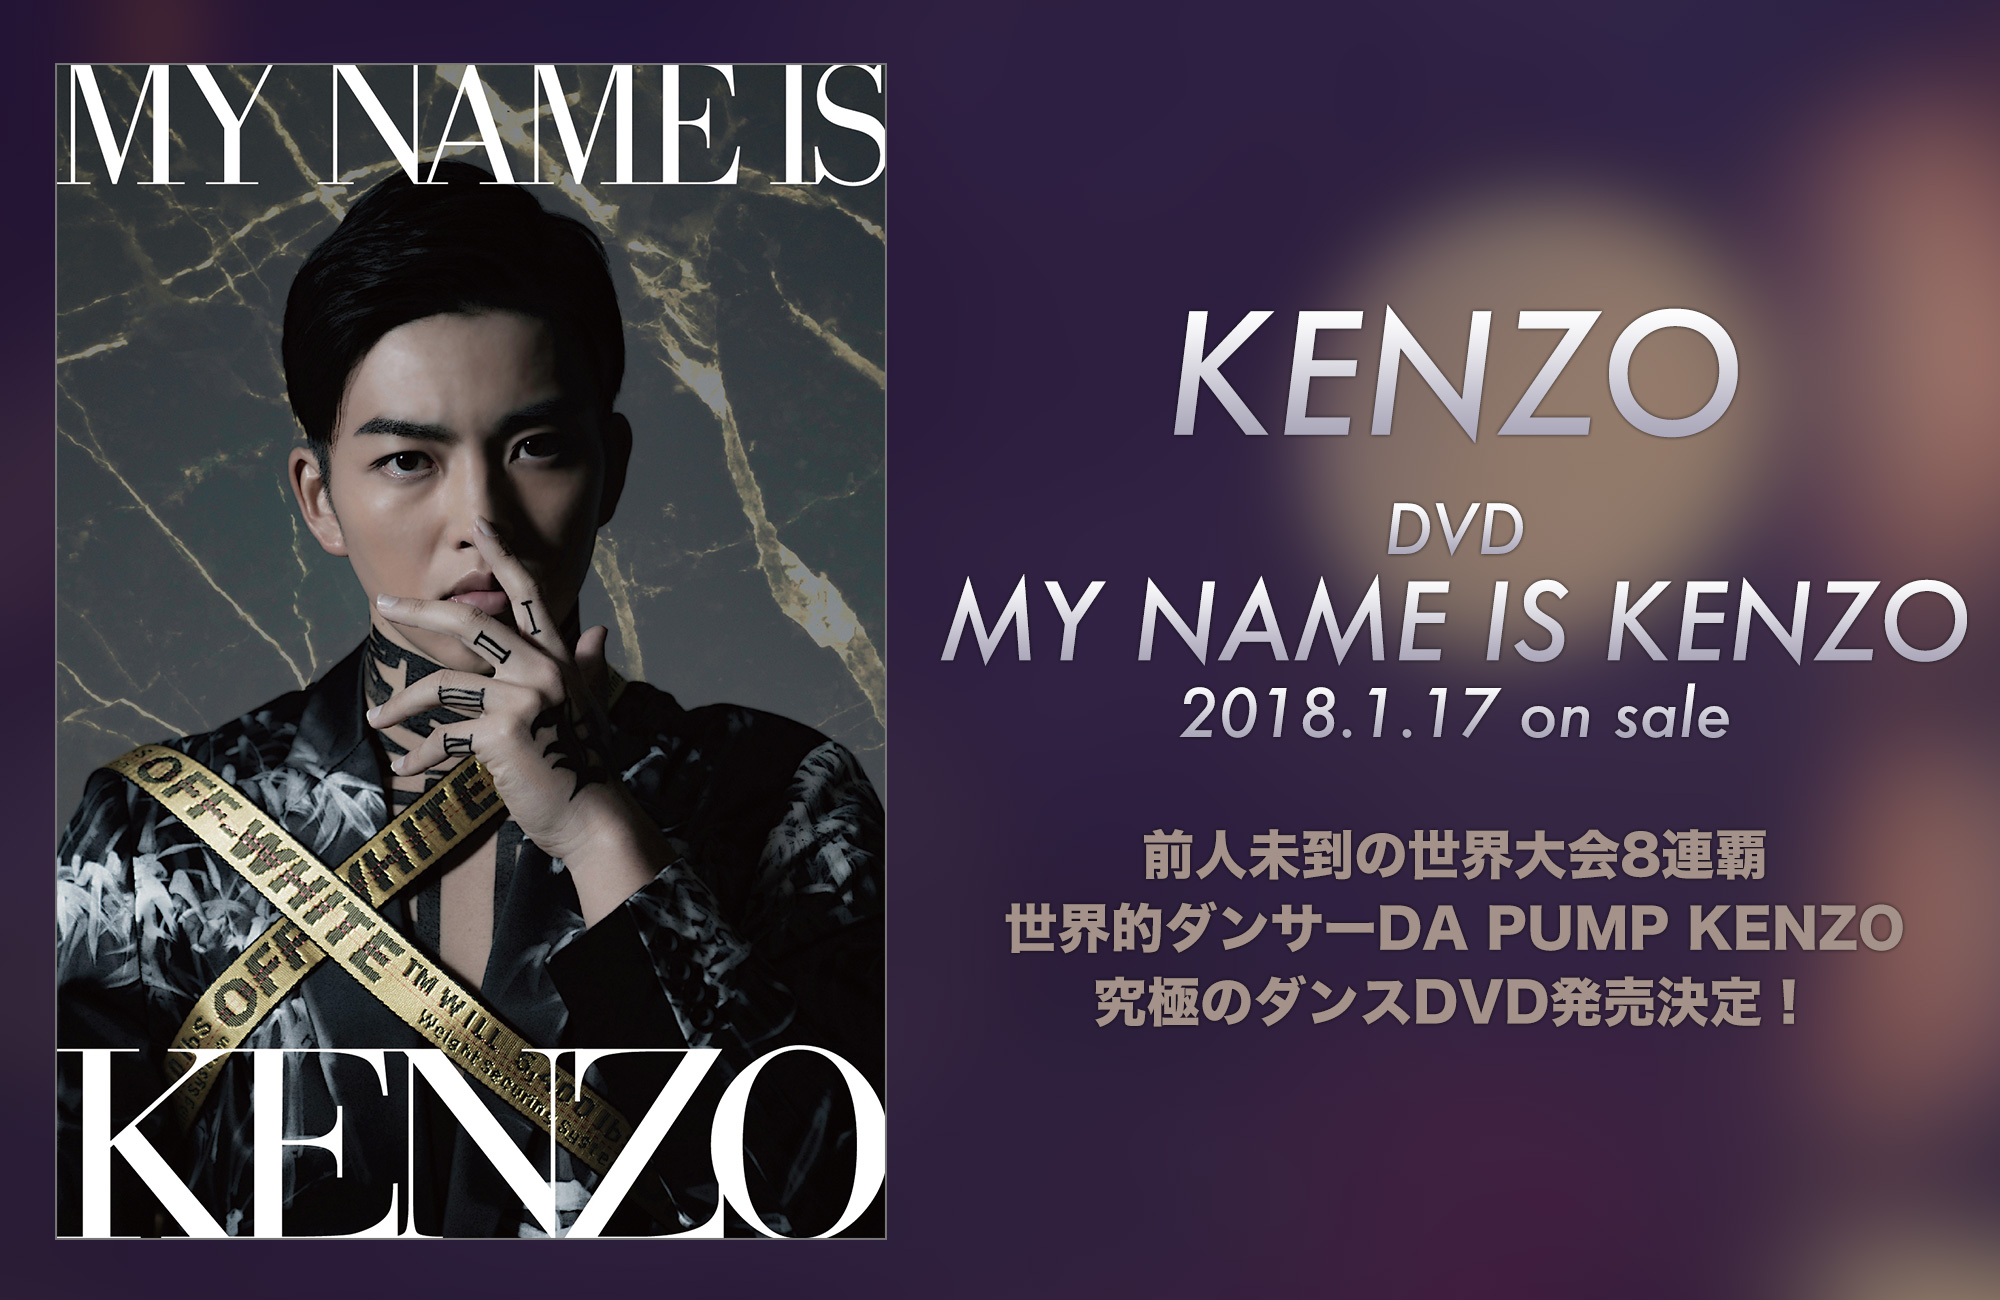 DVD「MY NAME IS KENZO」2018.1.17 ON SALE! 前人未到の世界大会8連覇！　世界的ダンサーDA PUMP KENZO究極のダンスDVD発売決定！